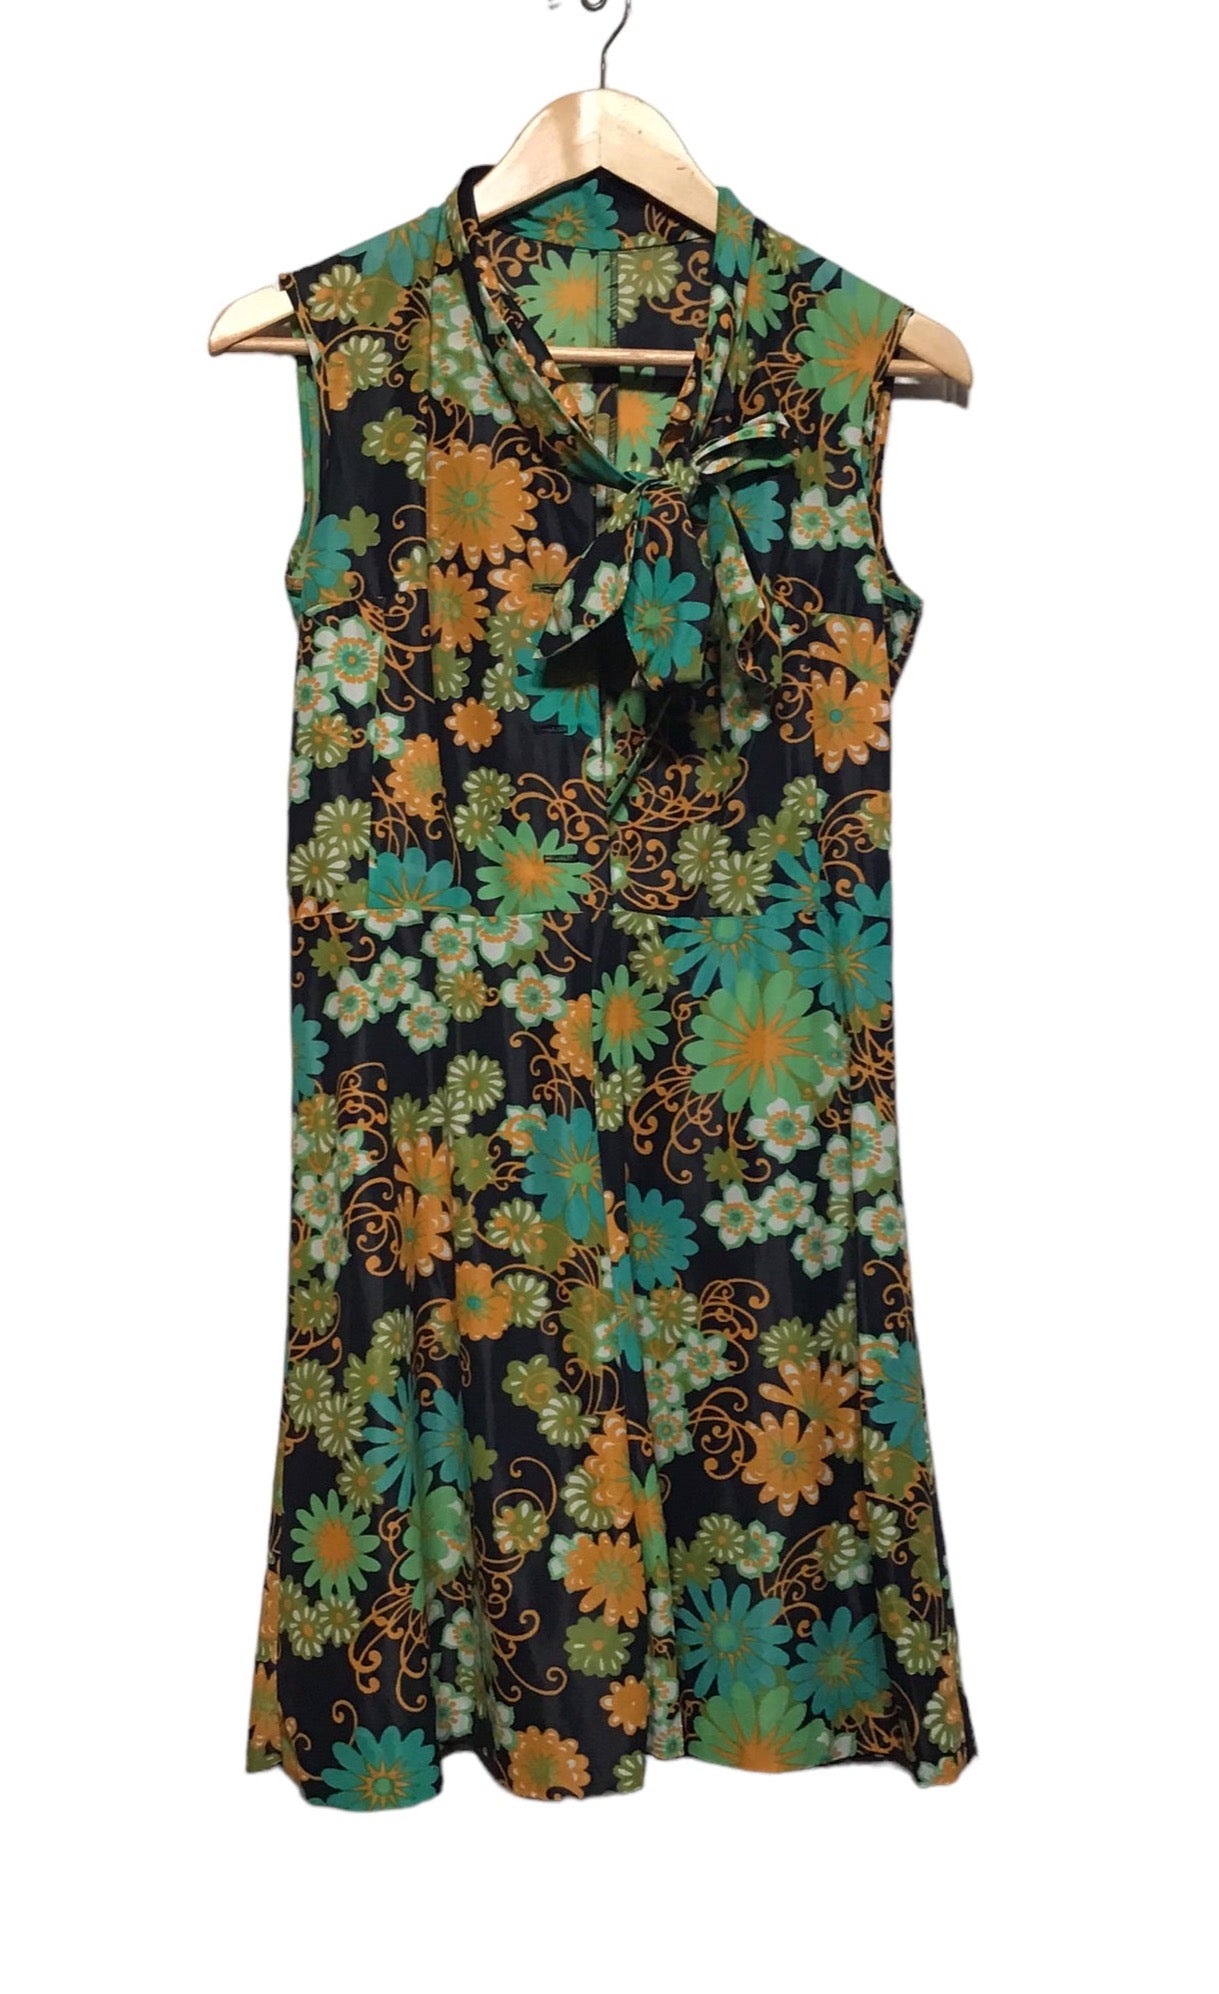 Floral Summer Dress (Size M)